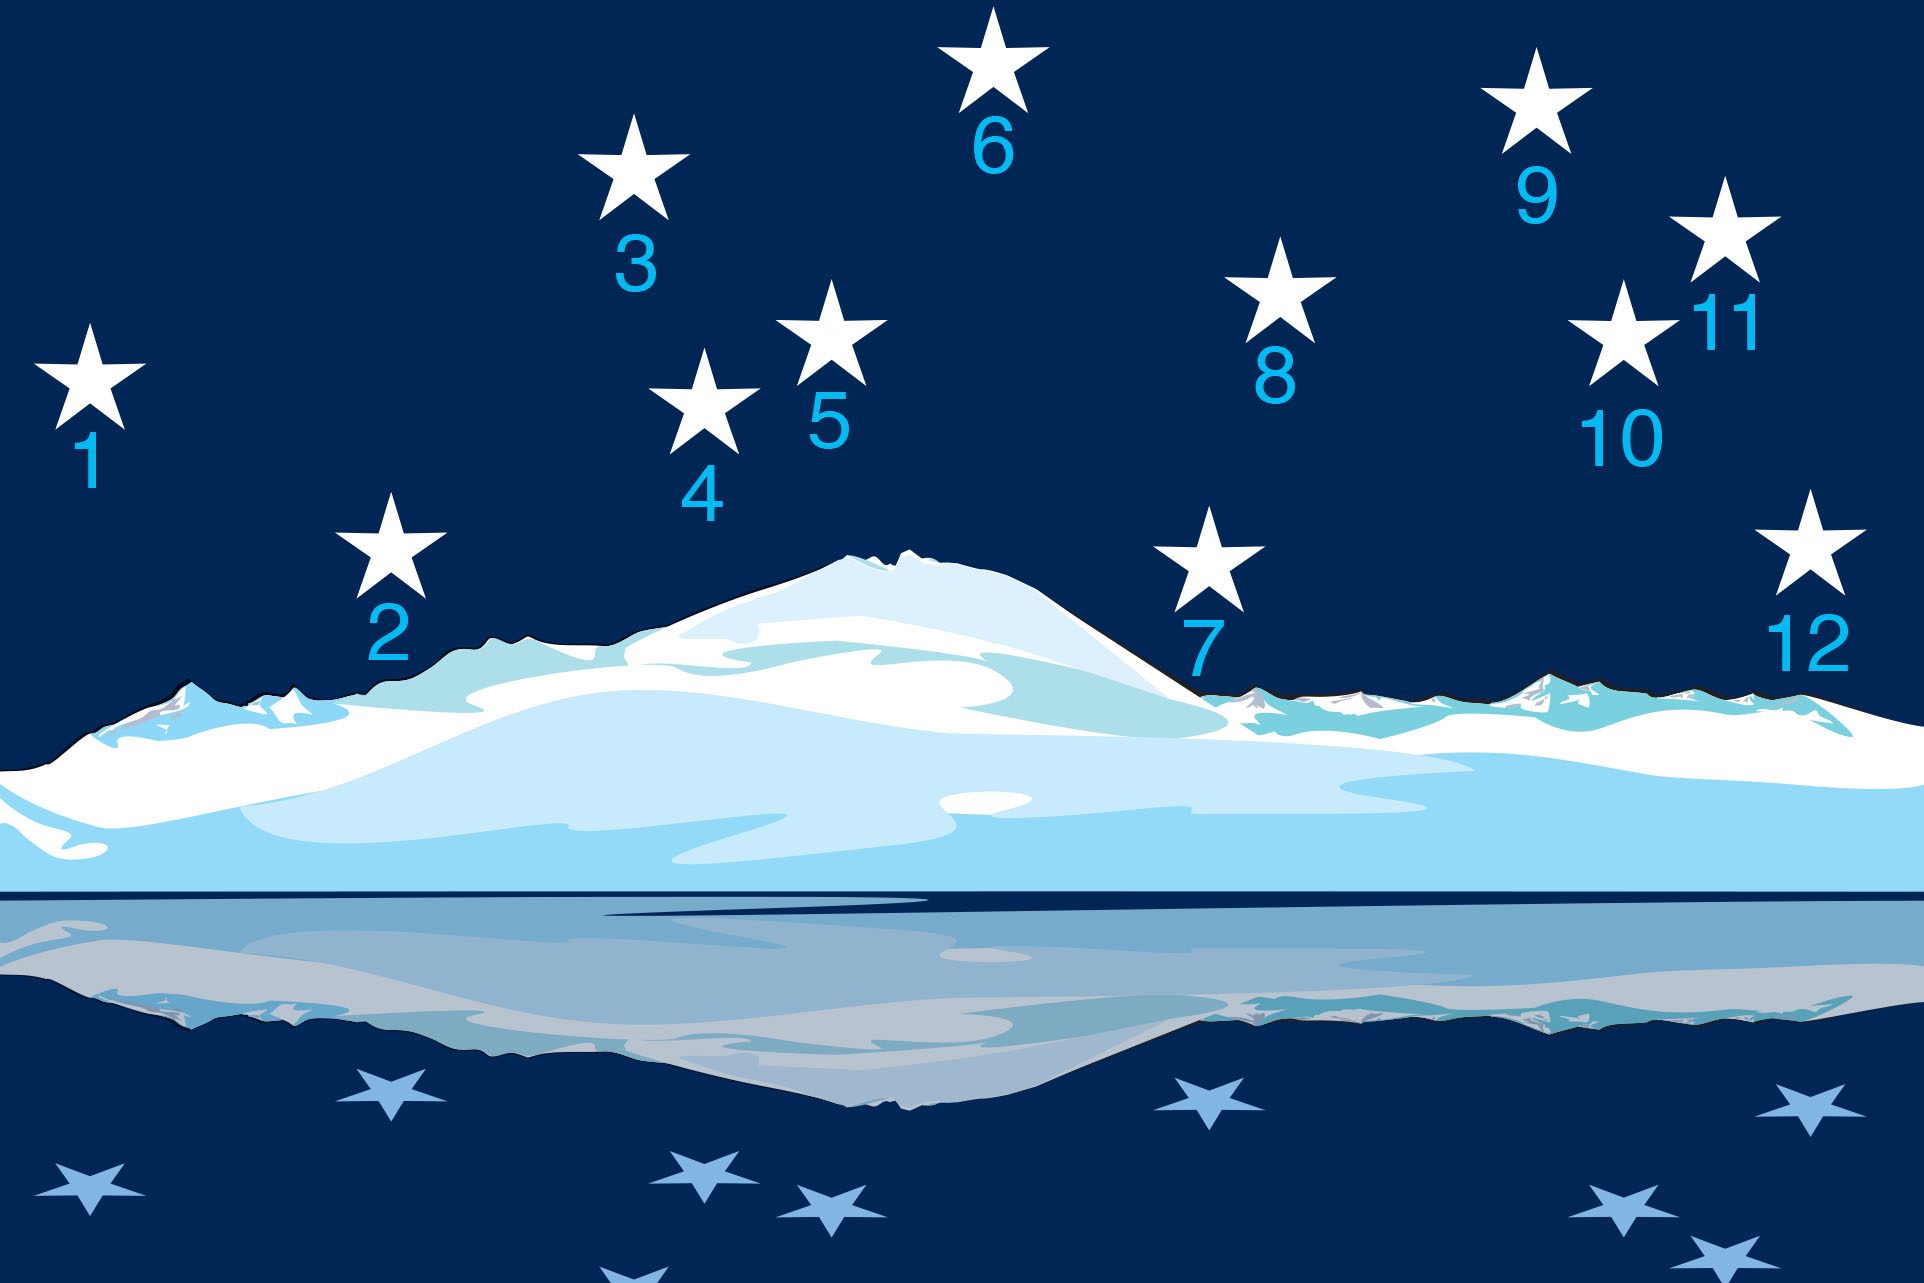 Illustration of numbered stars above arctic landscape